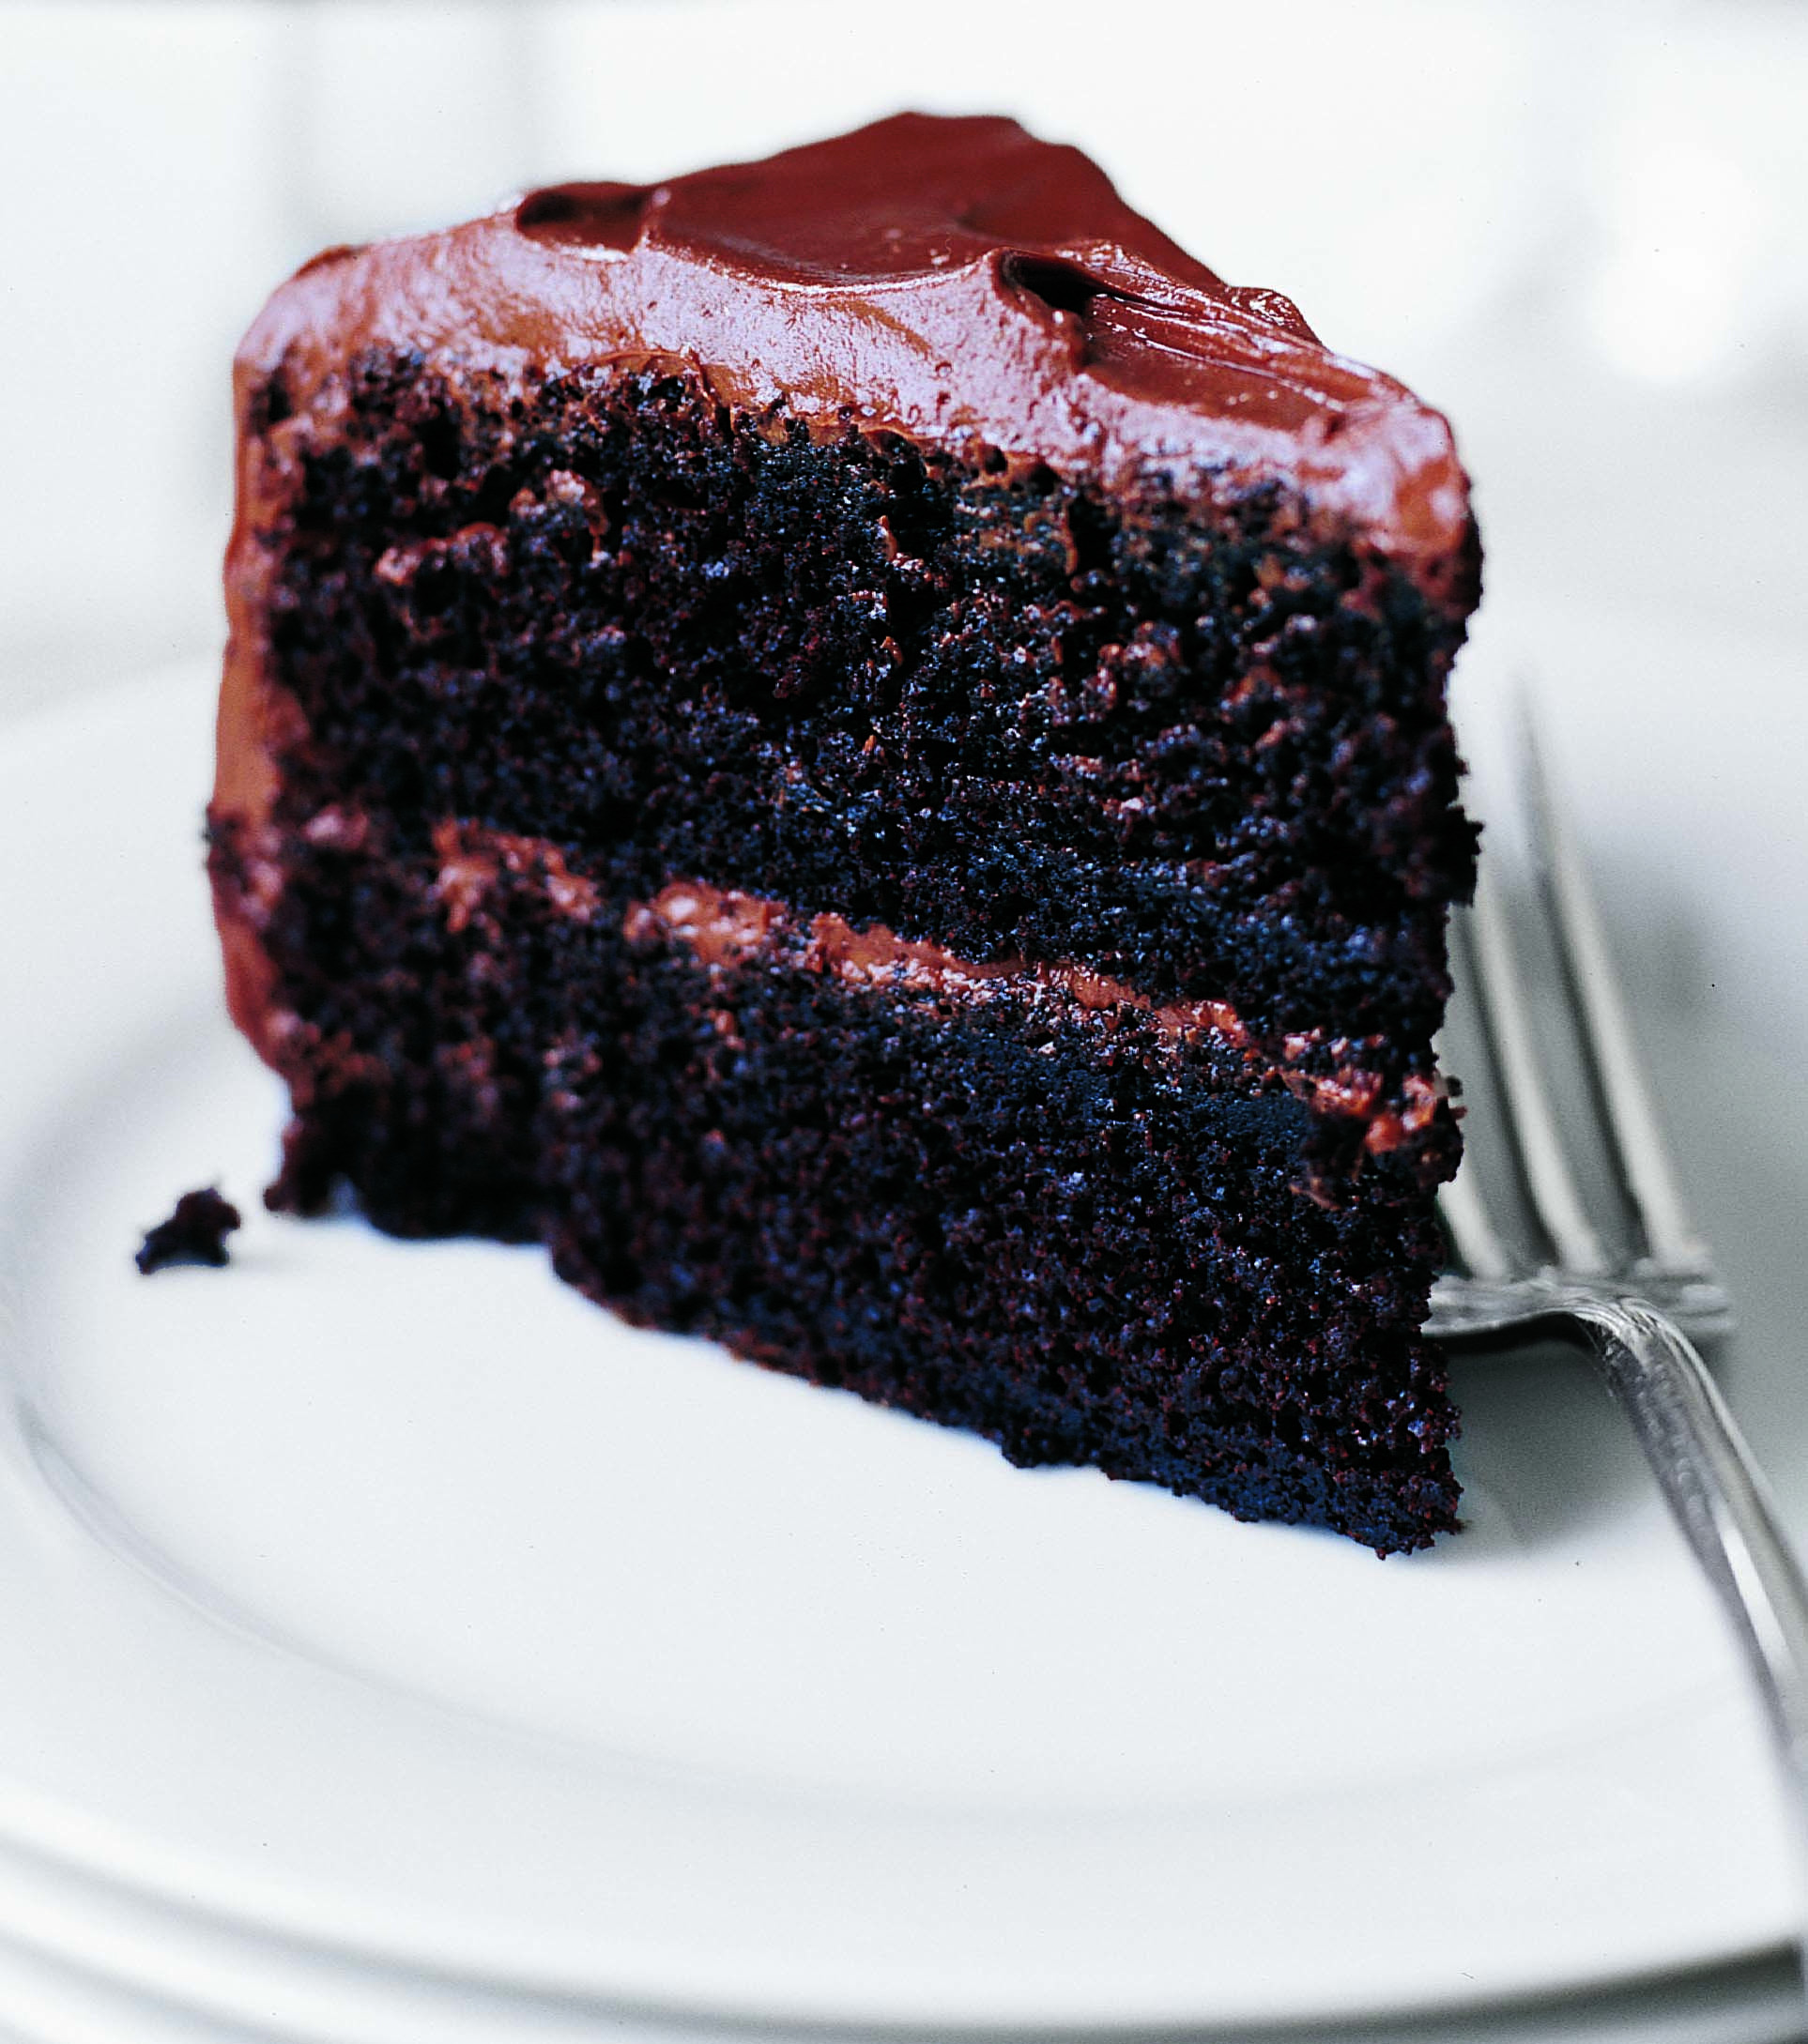 Ina Garten Chocolate Cake
 Best 25 Ina garten chocolate cake ideas on Pinterest